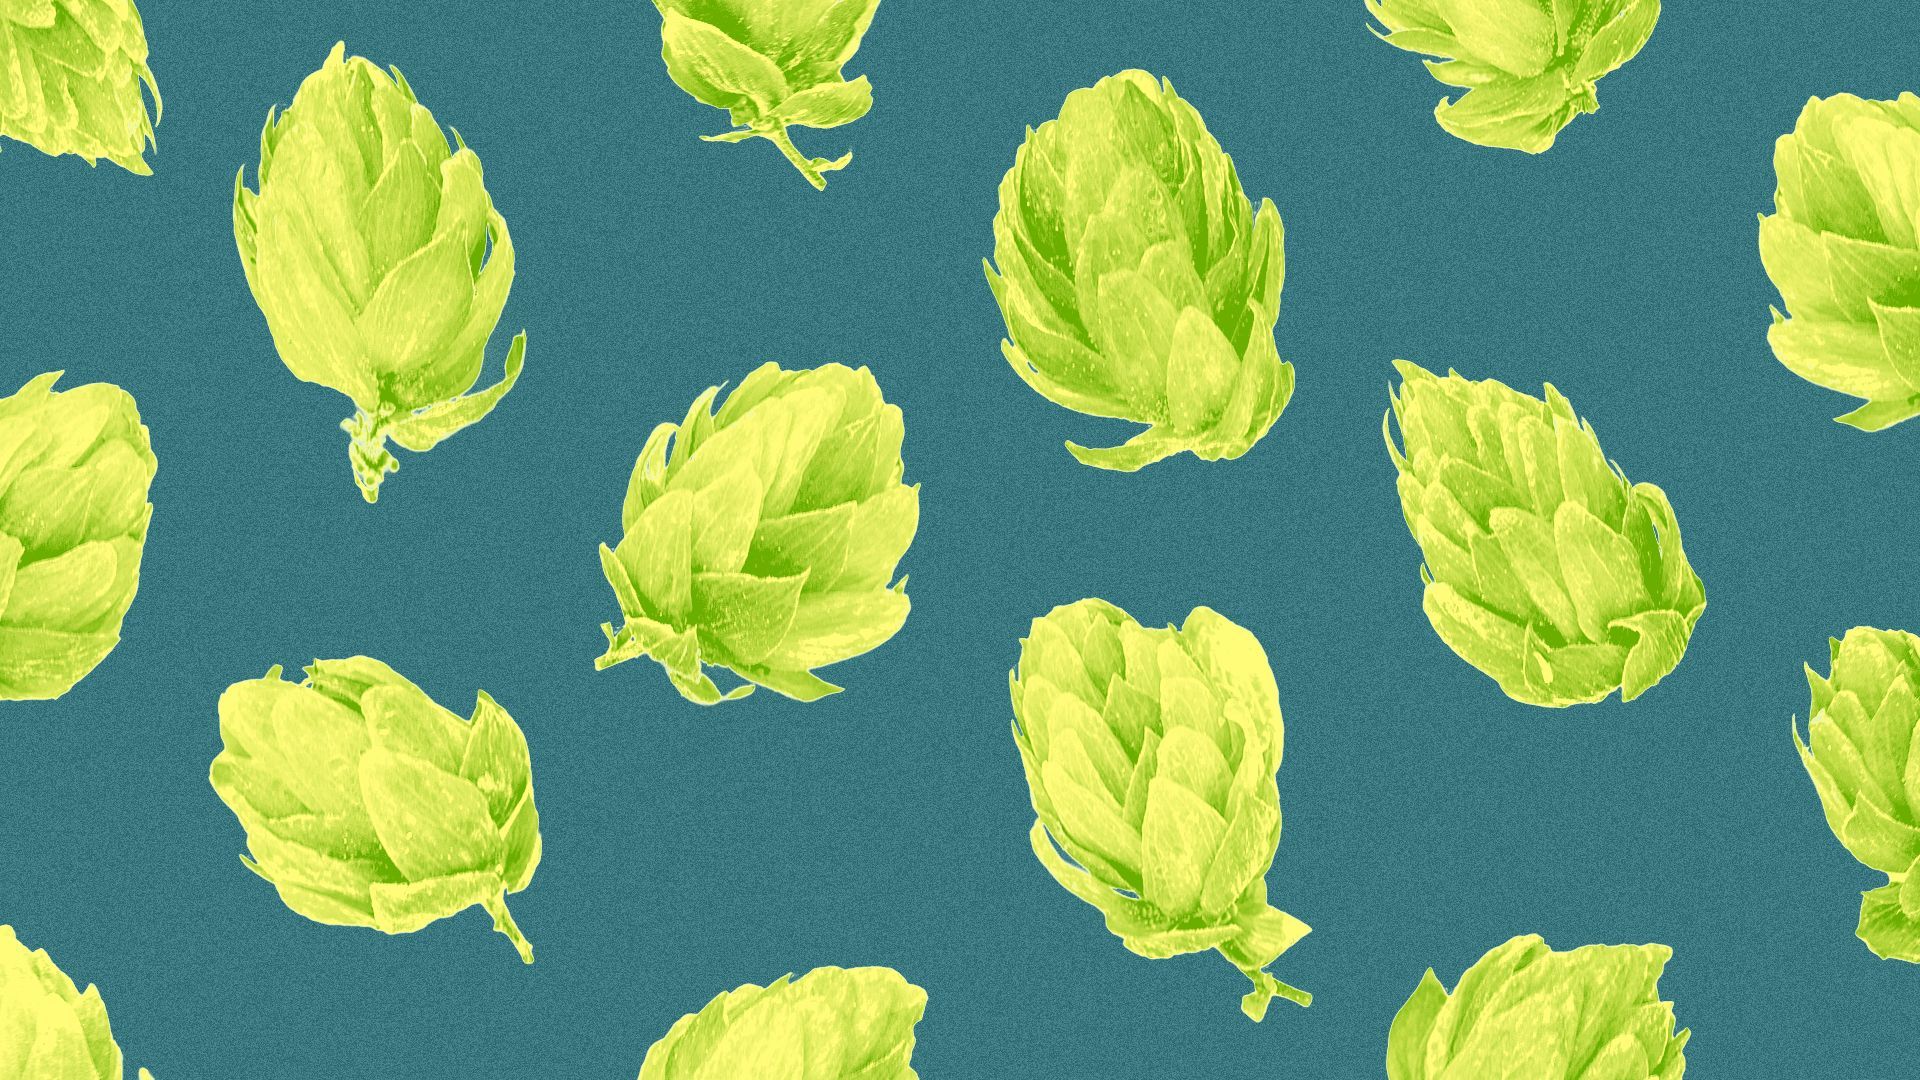 Illustration of a pattern of hops.